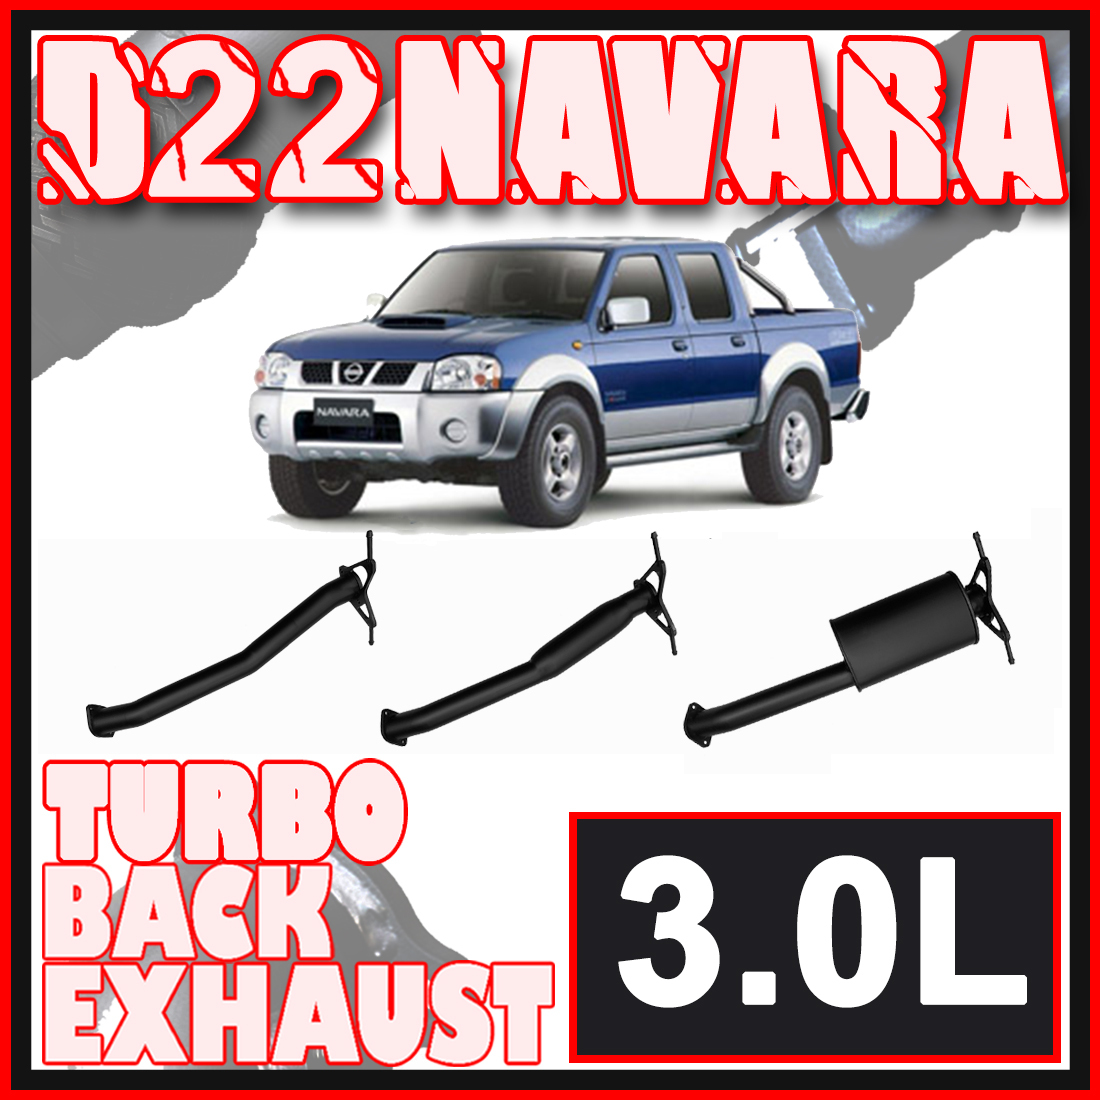 Nissan D22 Navara Exhaust 3L 3" Systems image